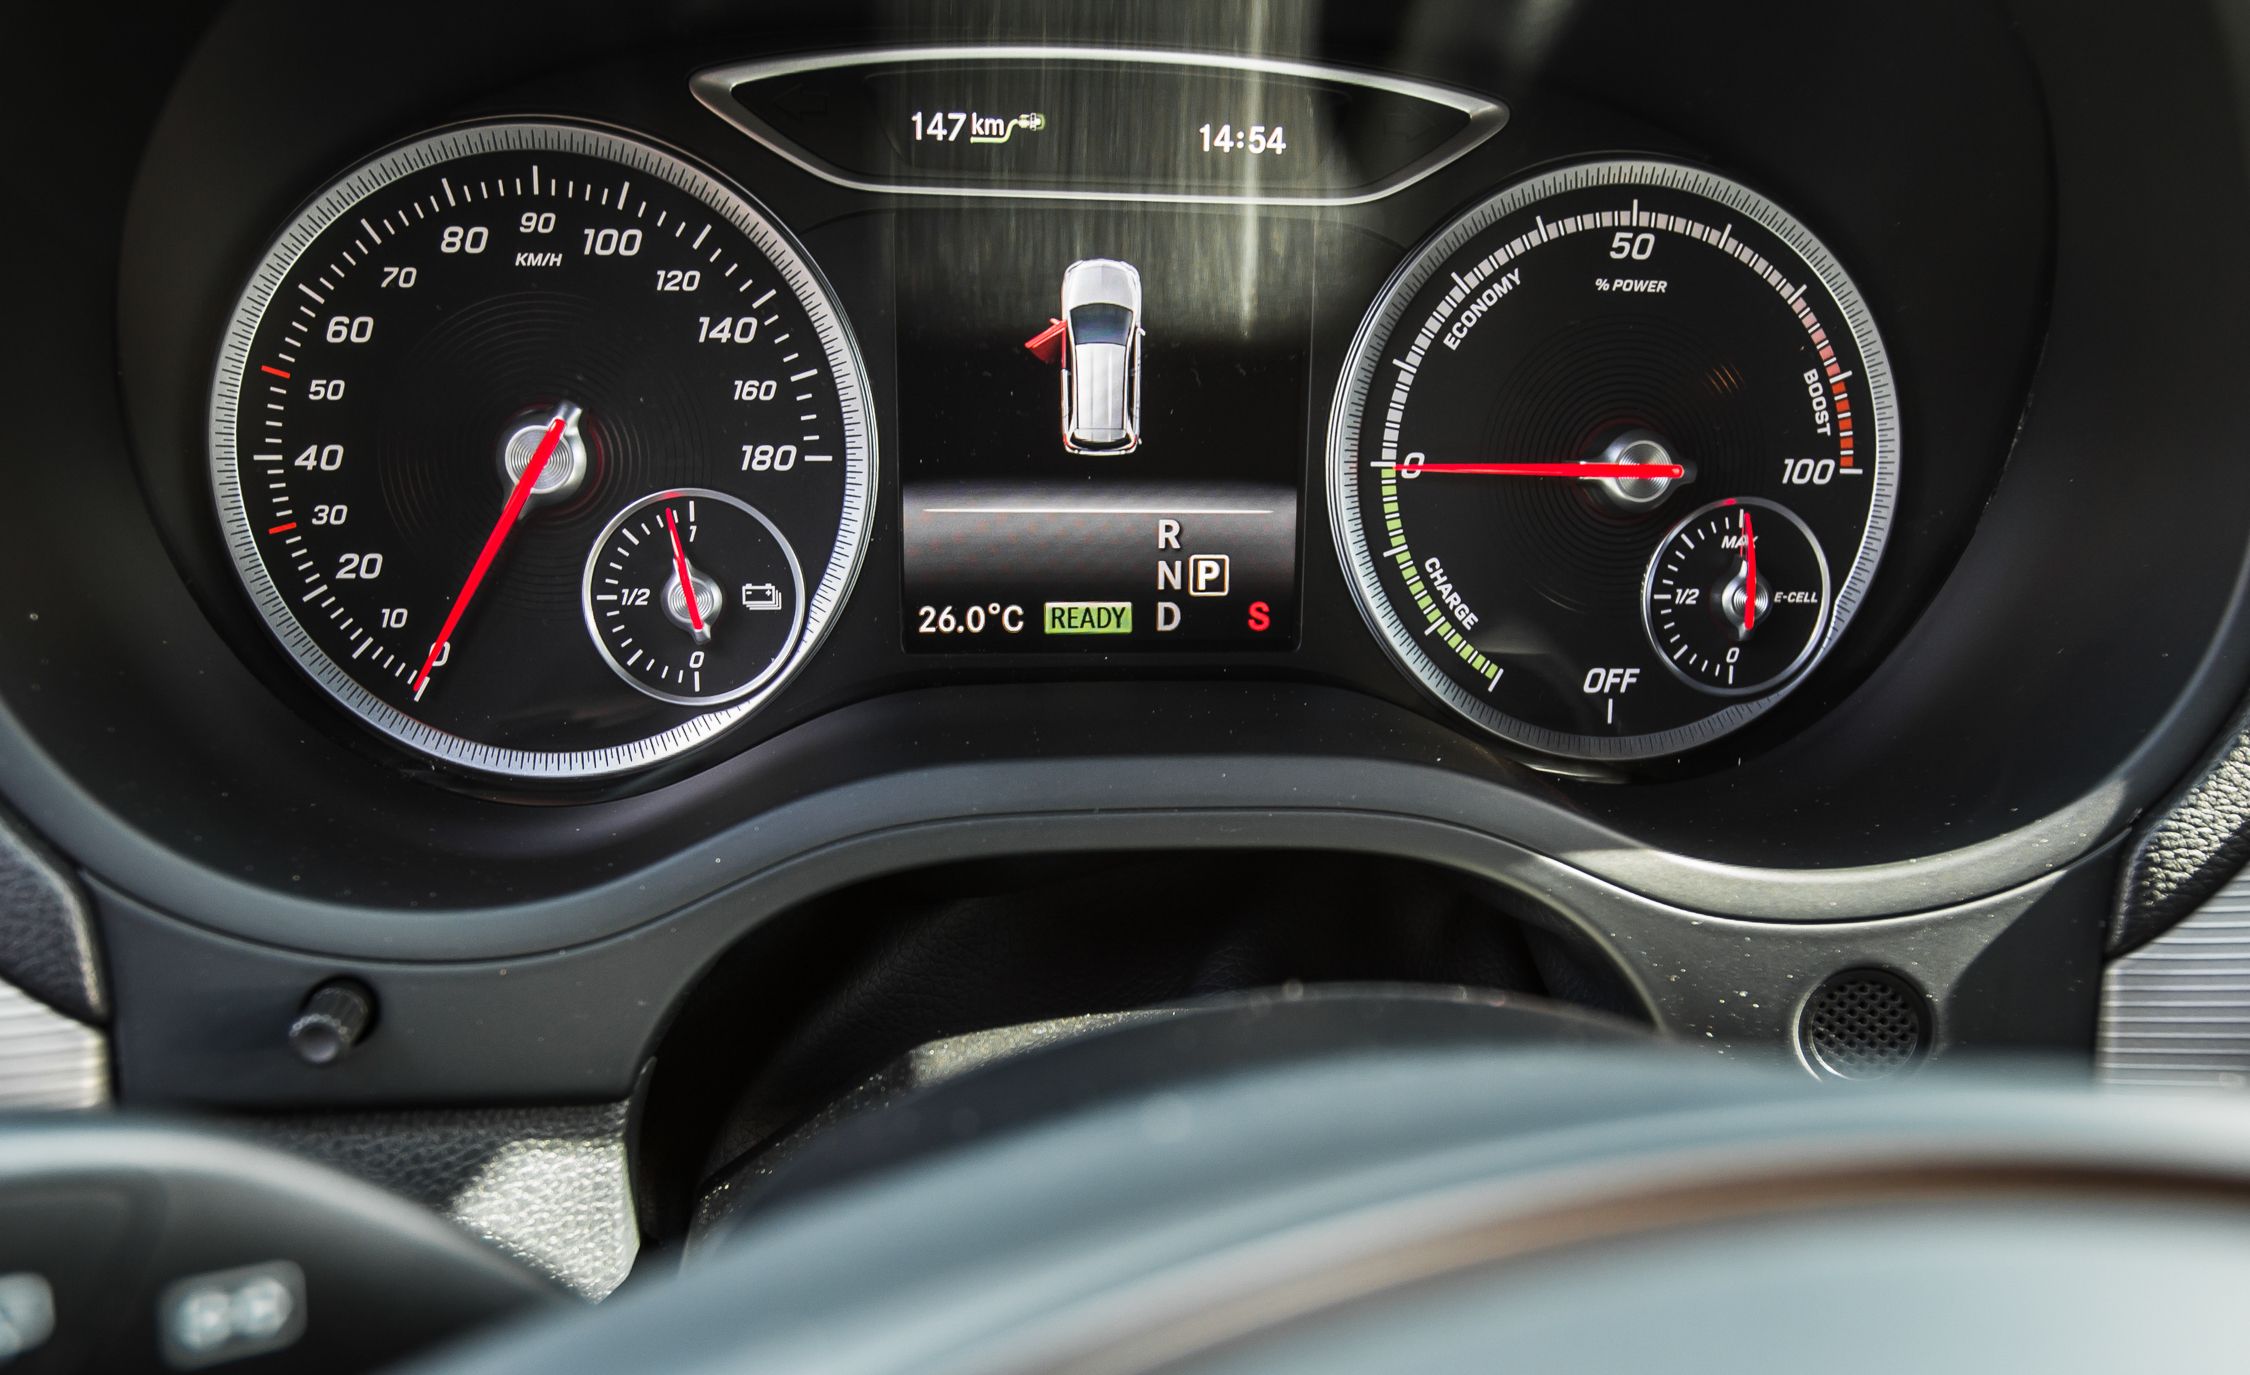 2017 Mercedes Benz B250e Interior View Speedometer Instrument Cluster (View 4 of 24)